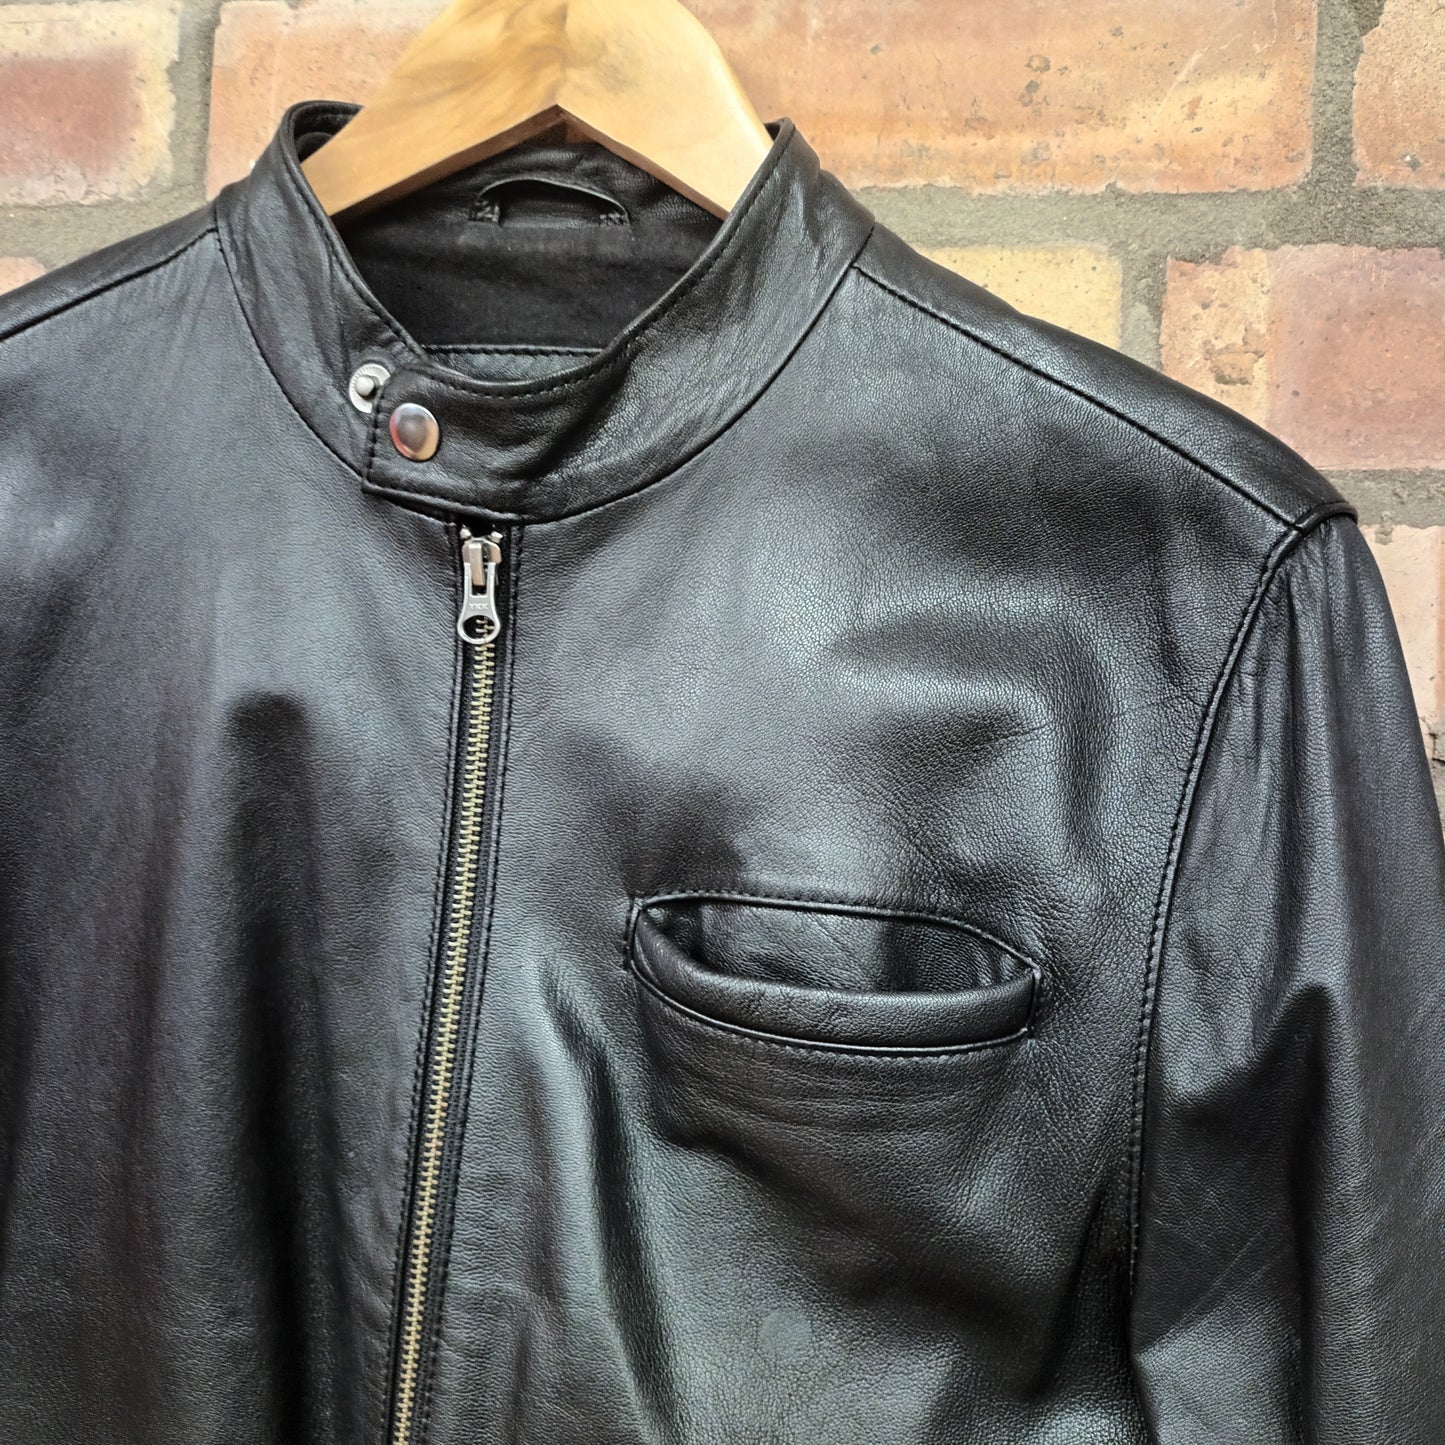 Topman Medium Black Leather Biker Jacket